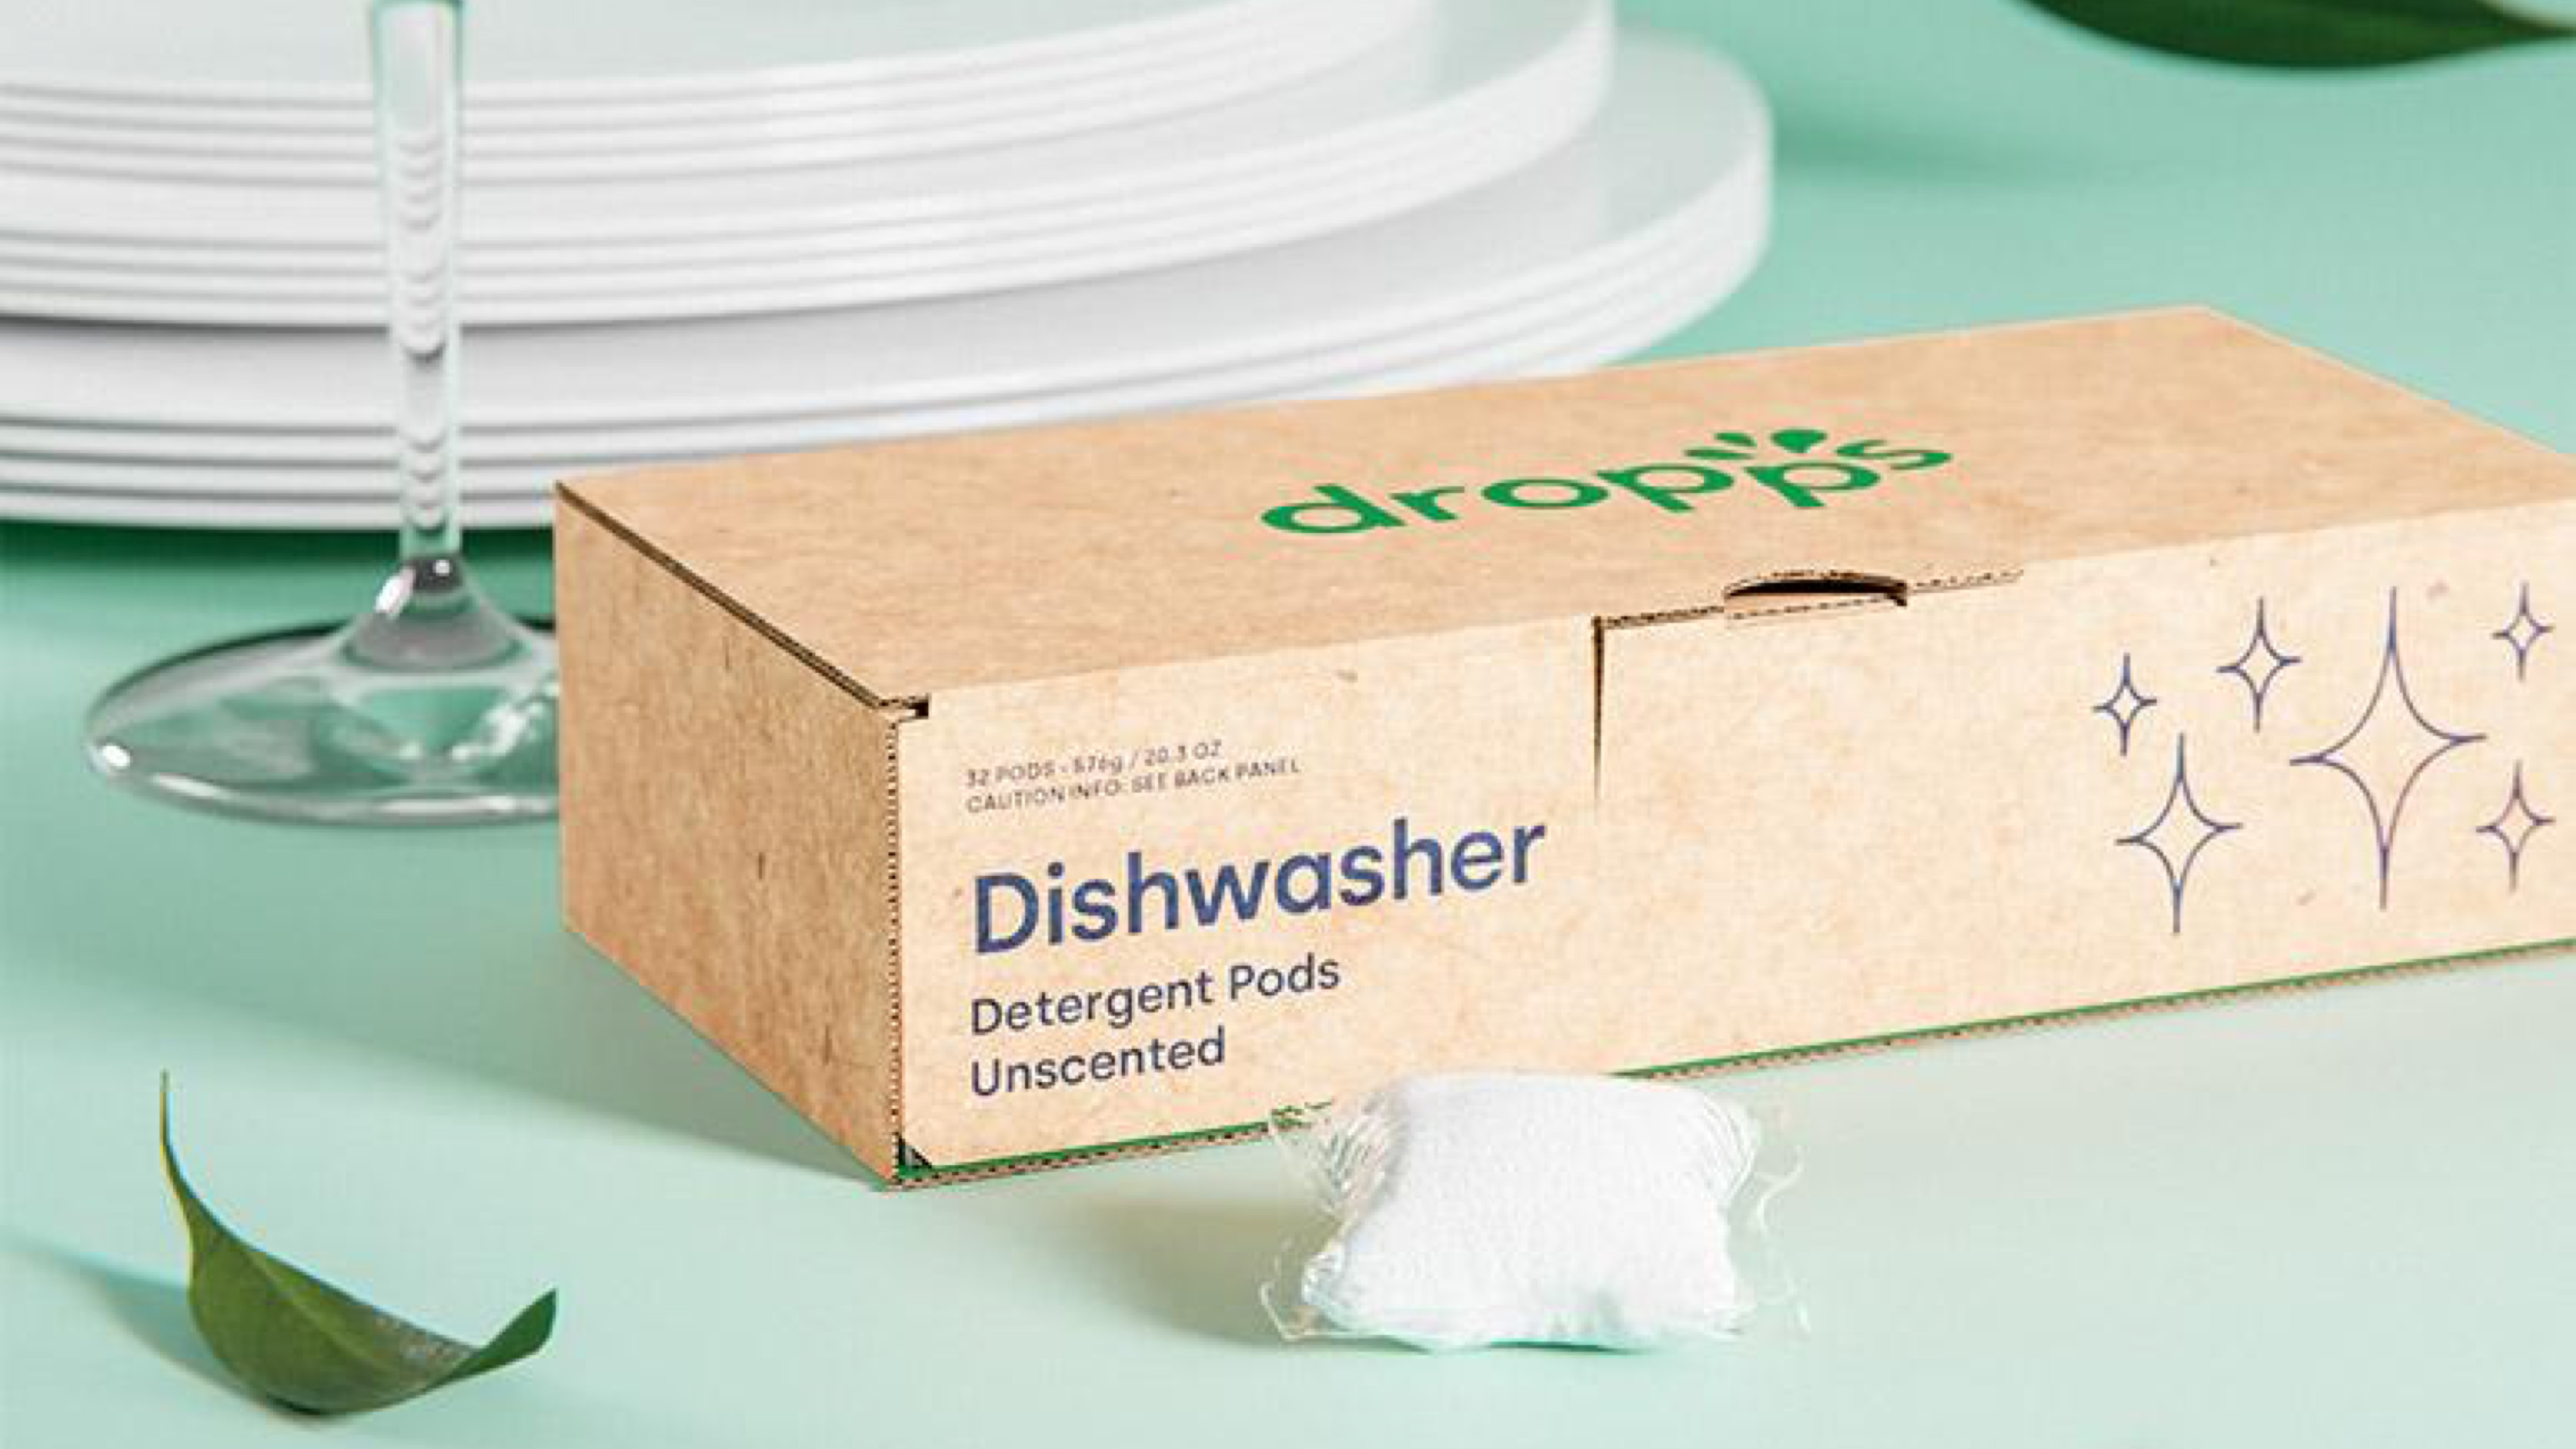 dishwasher detergent pods whose ingredients are mineral-based